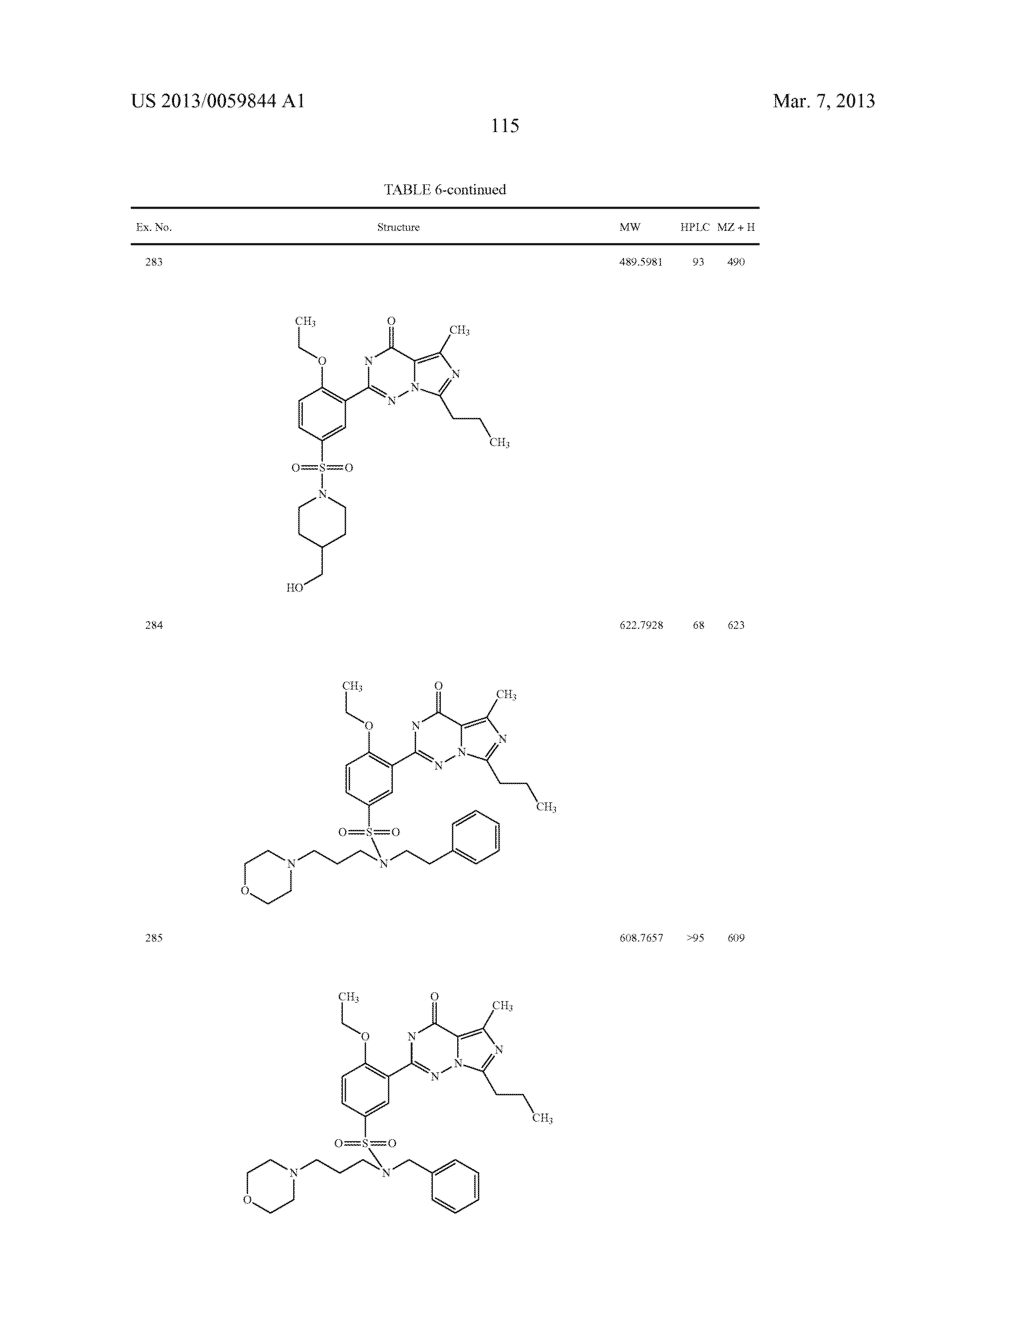 2-PHENYL SUBSTITUTED IMIDAZOTRIAZINONES AS PHOSPHODIESTERASE INHIBITORS - diagram, schematic, and image 116